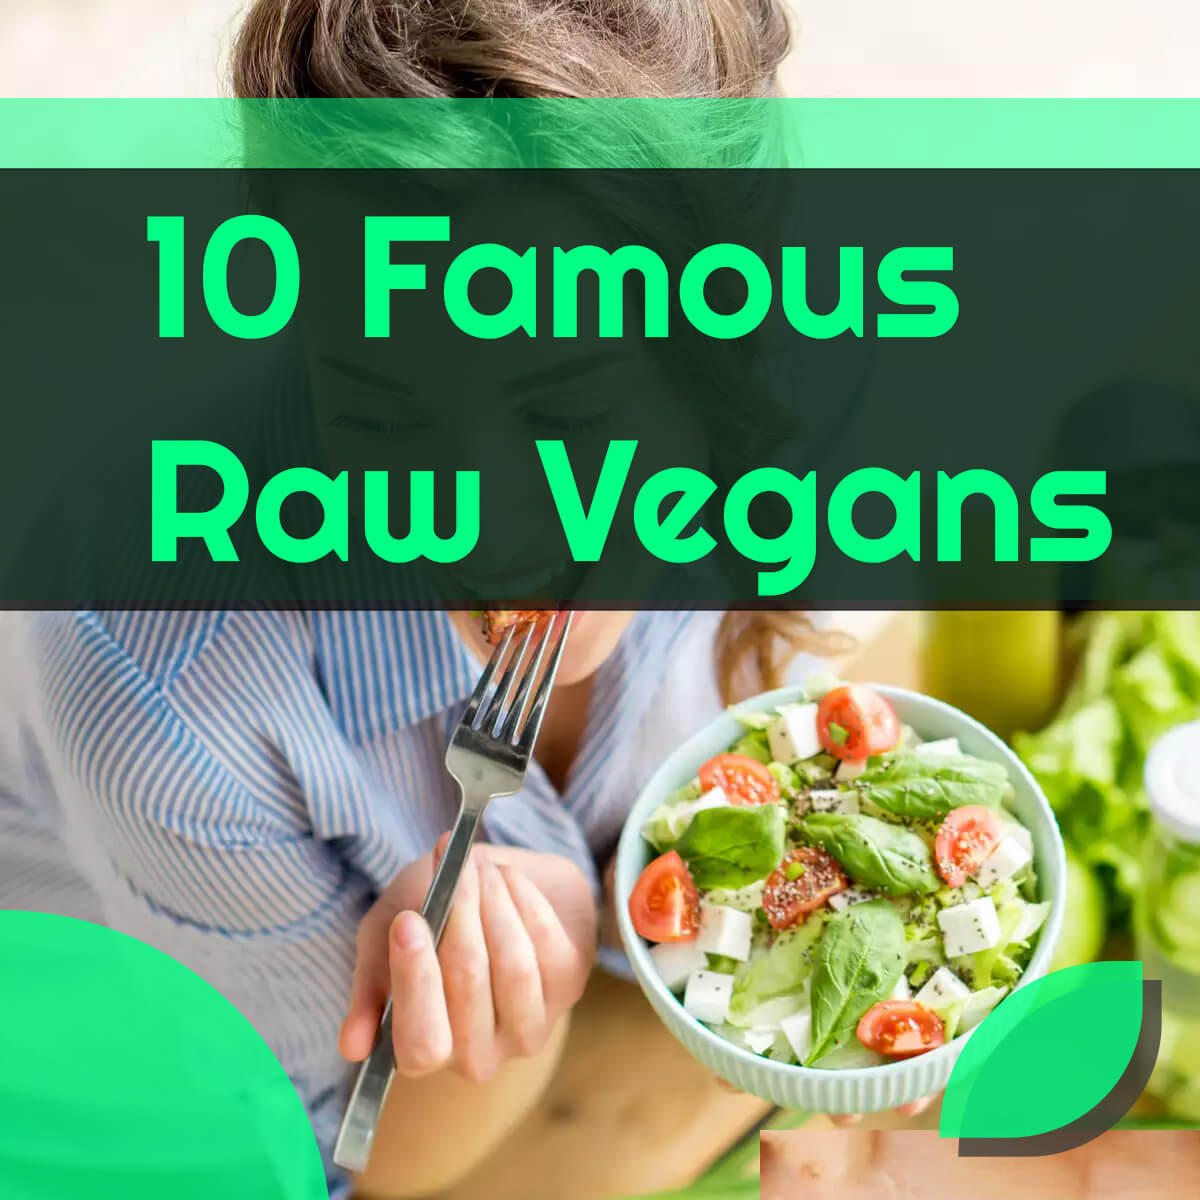 10 Famous Raw Vegans You Should Know